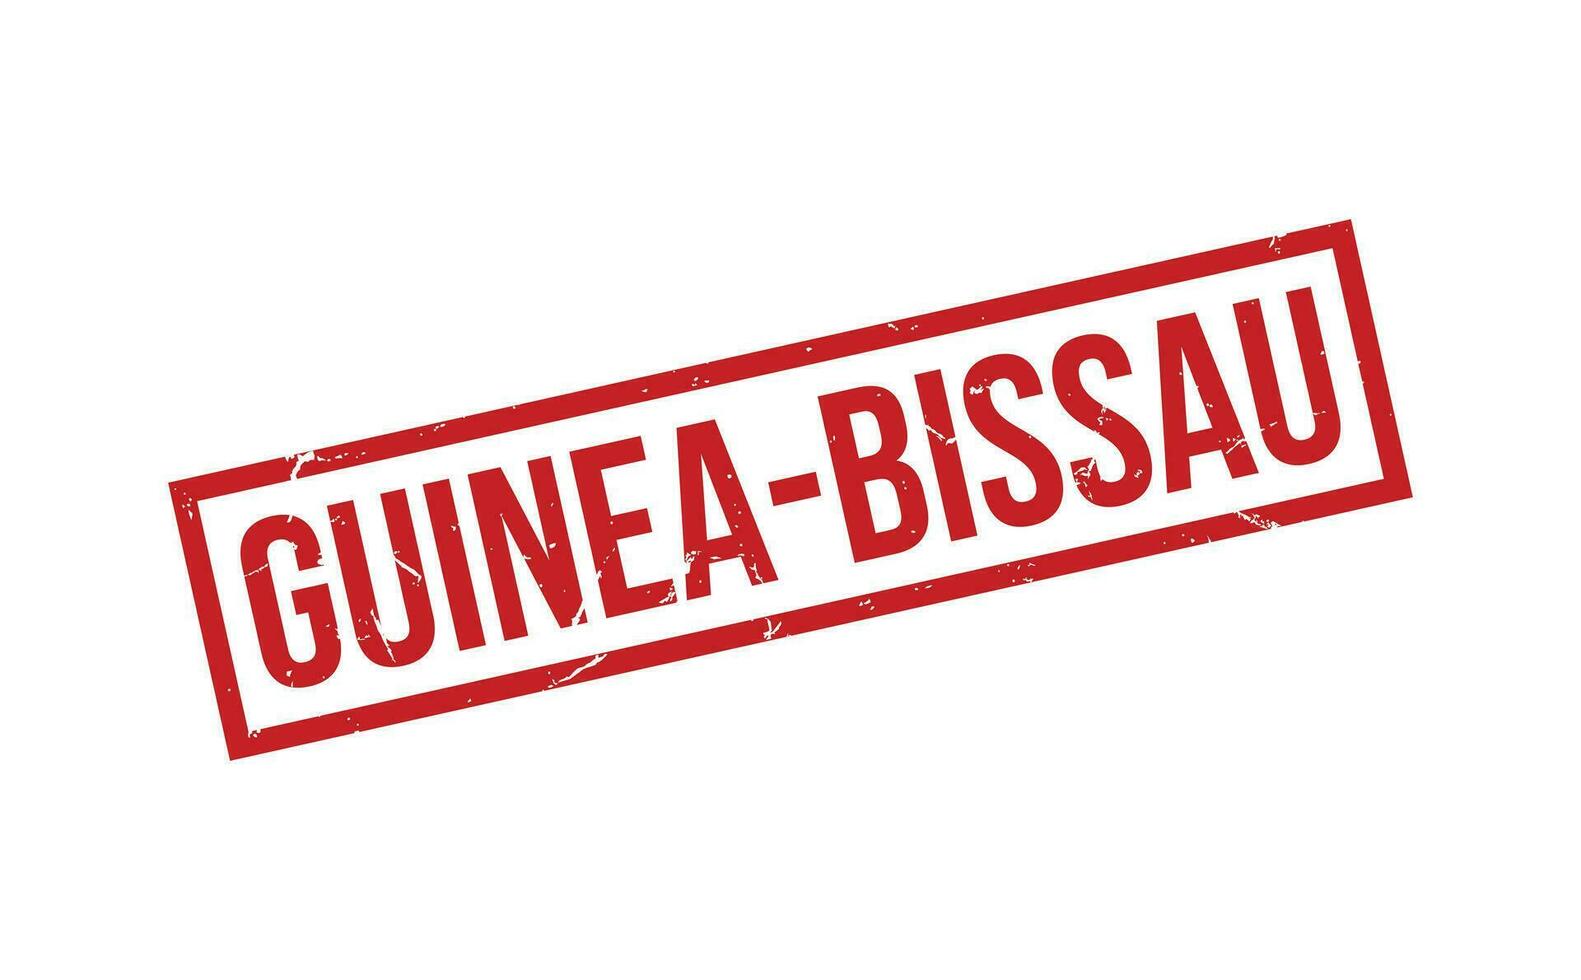 Guinea bissau Gummi Briefmarke Siegel Vektor